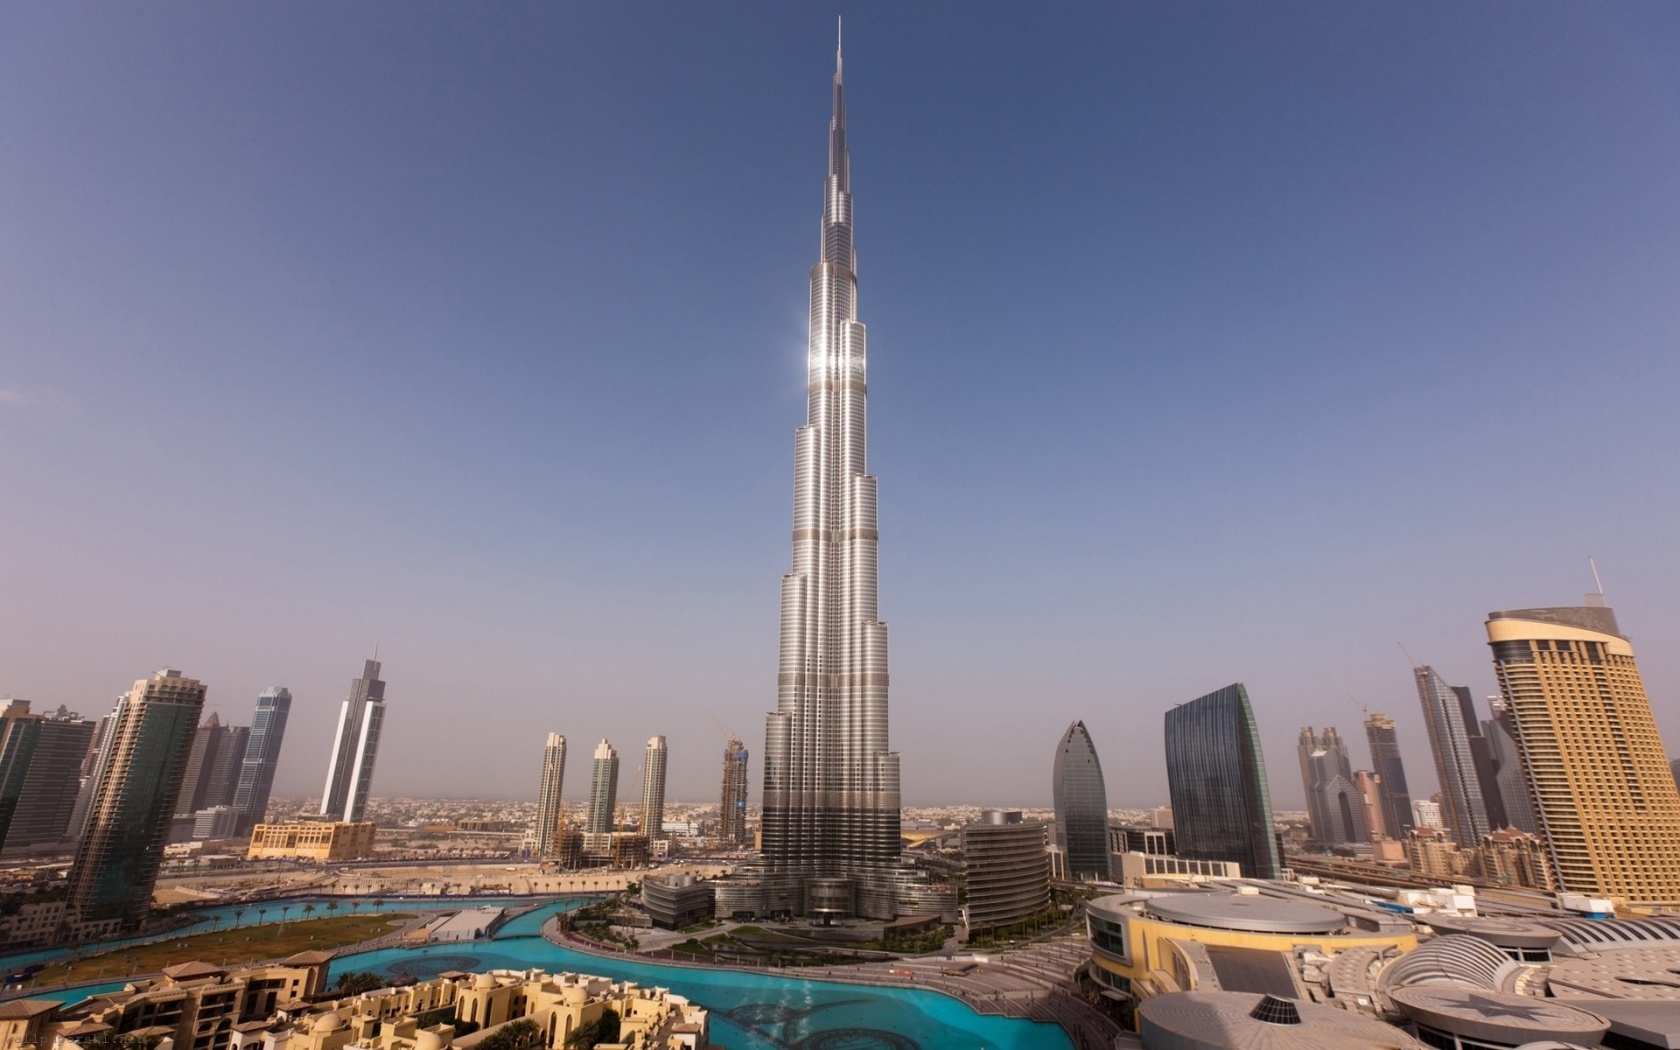 Dubai Skyscrapers Towers Houses Burj Khalifa Sunset Water Sky